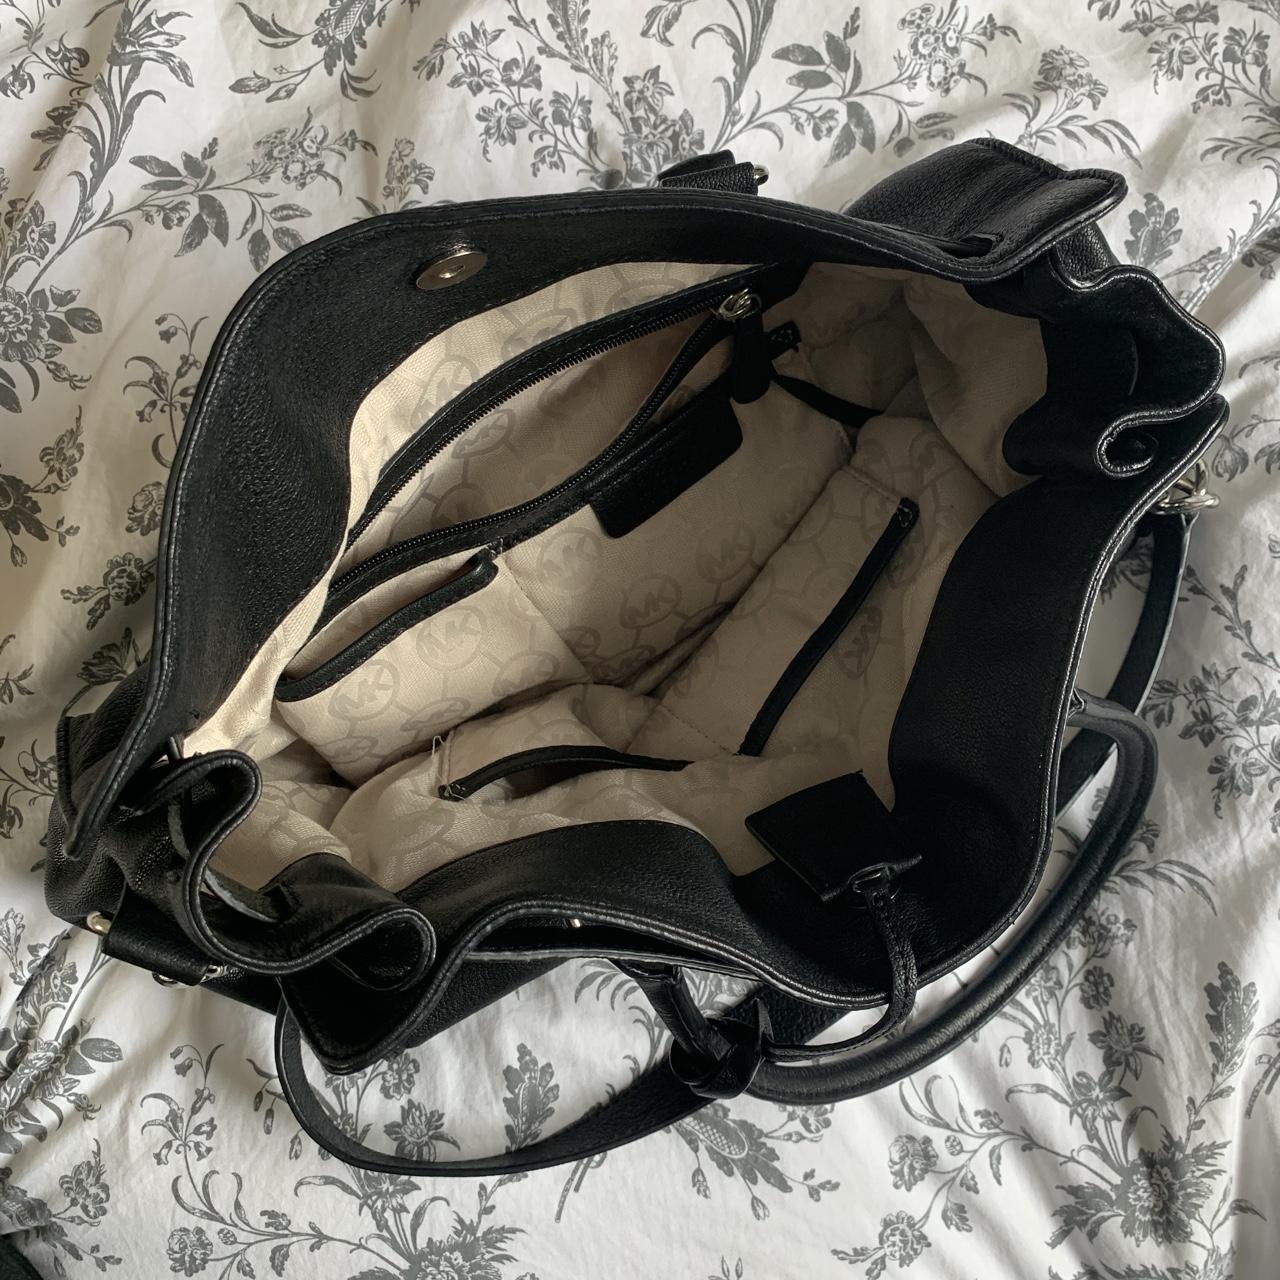 Michael Kors Hamilton tote bag black soft leather - Depop